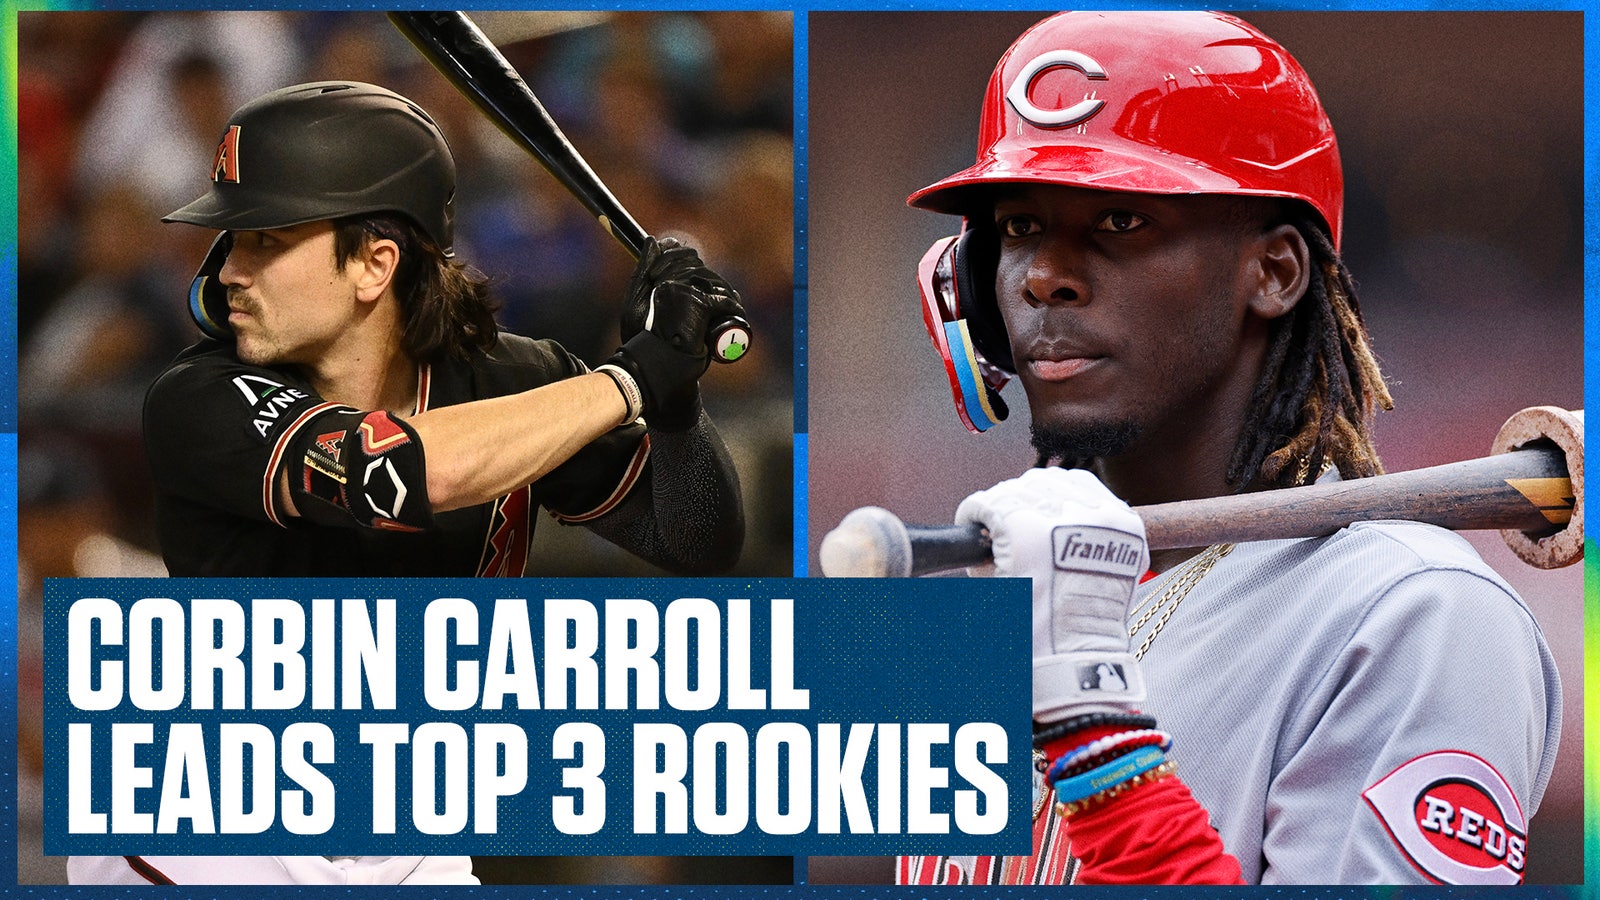 Corbin Carroll headlines list of top MLB rookies